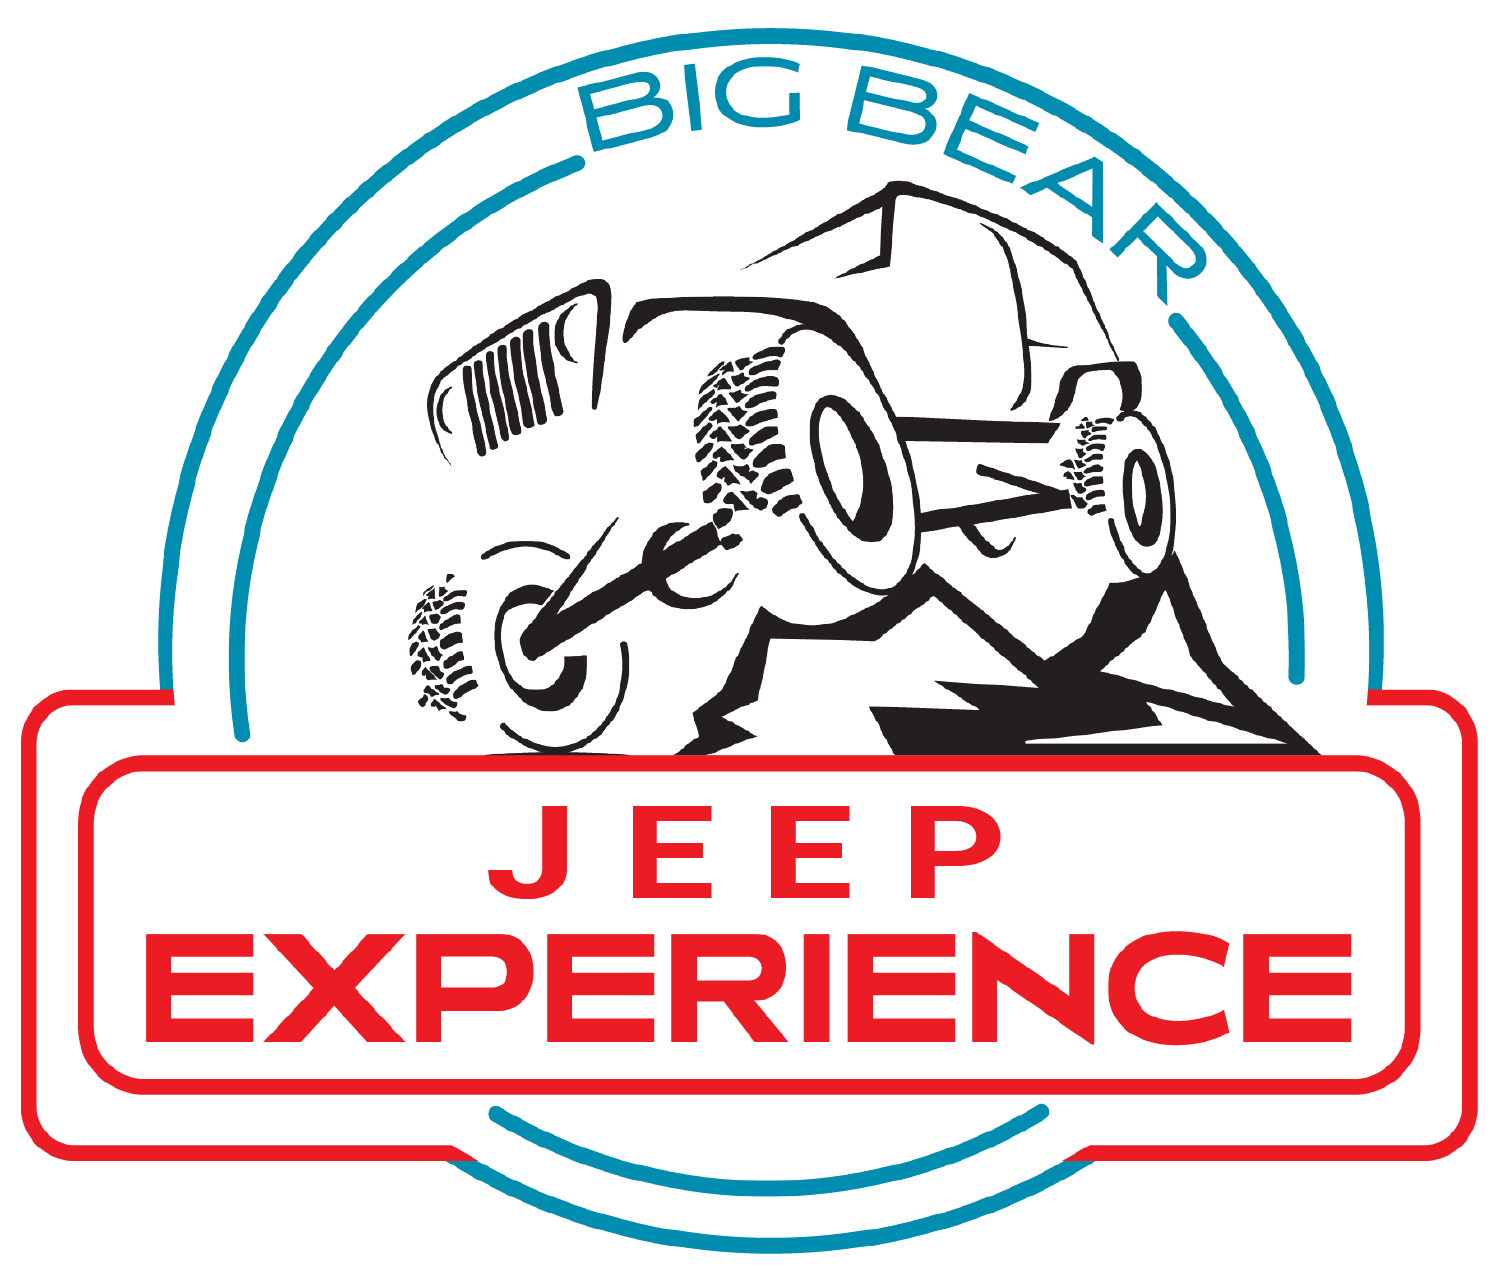 Big Bear Jeep Experience logo image